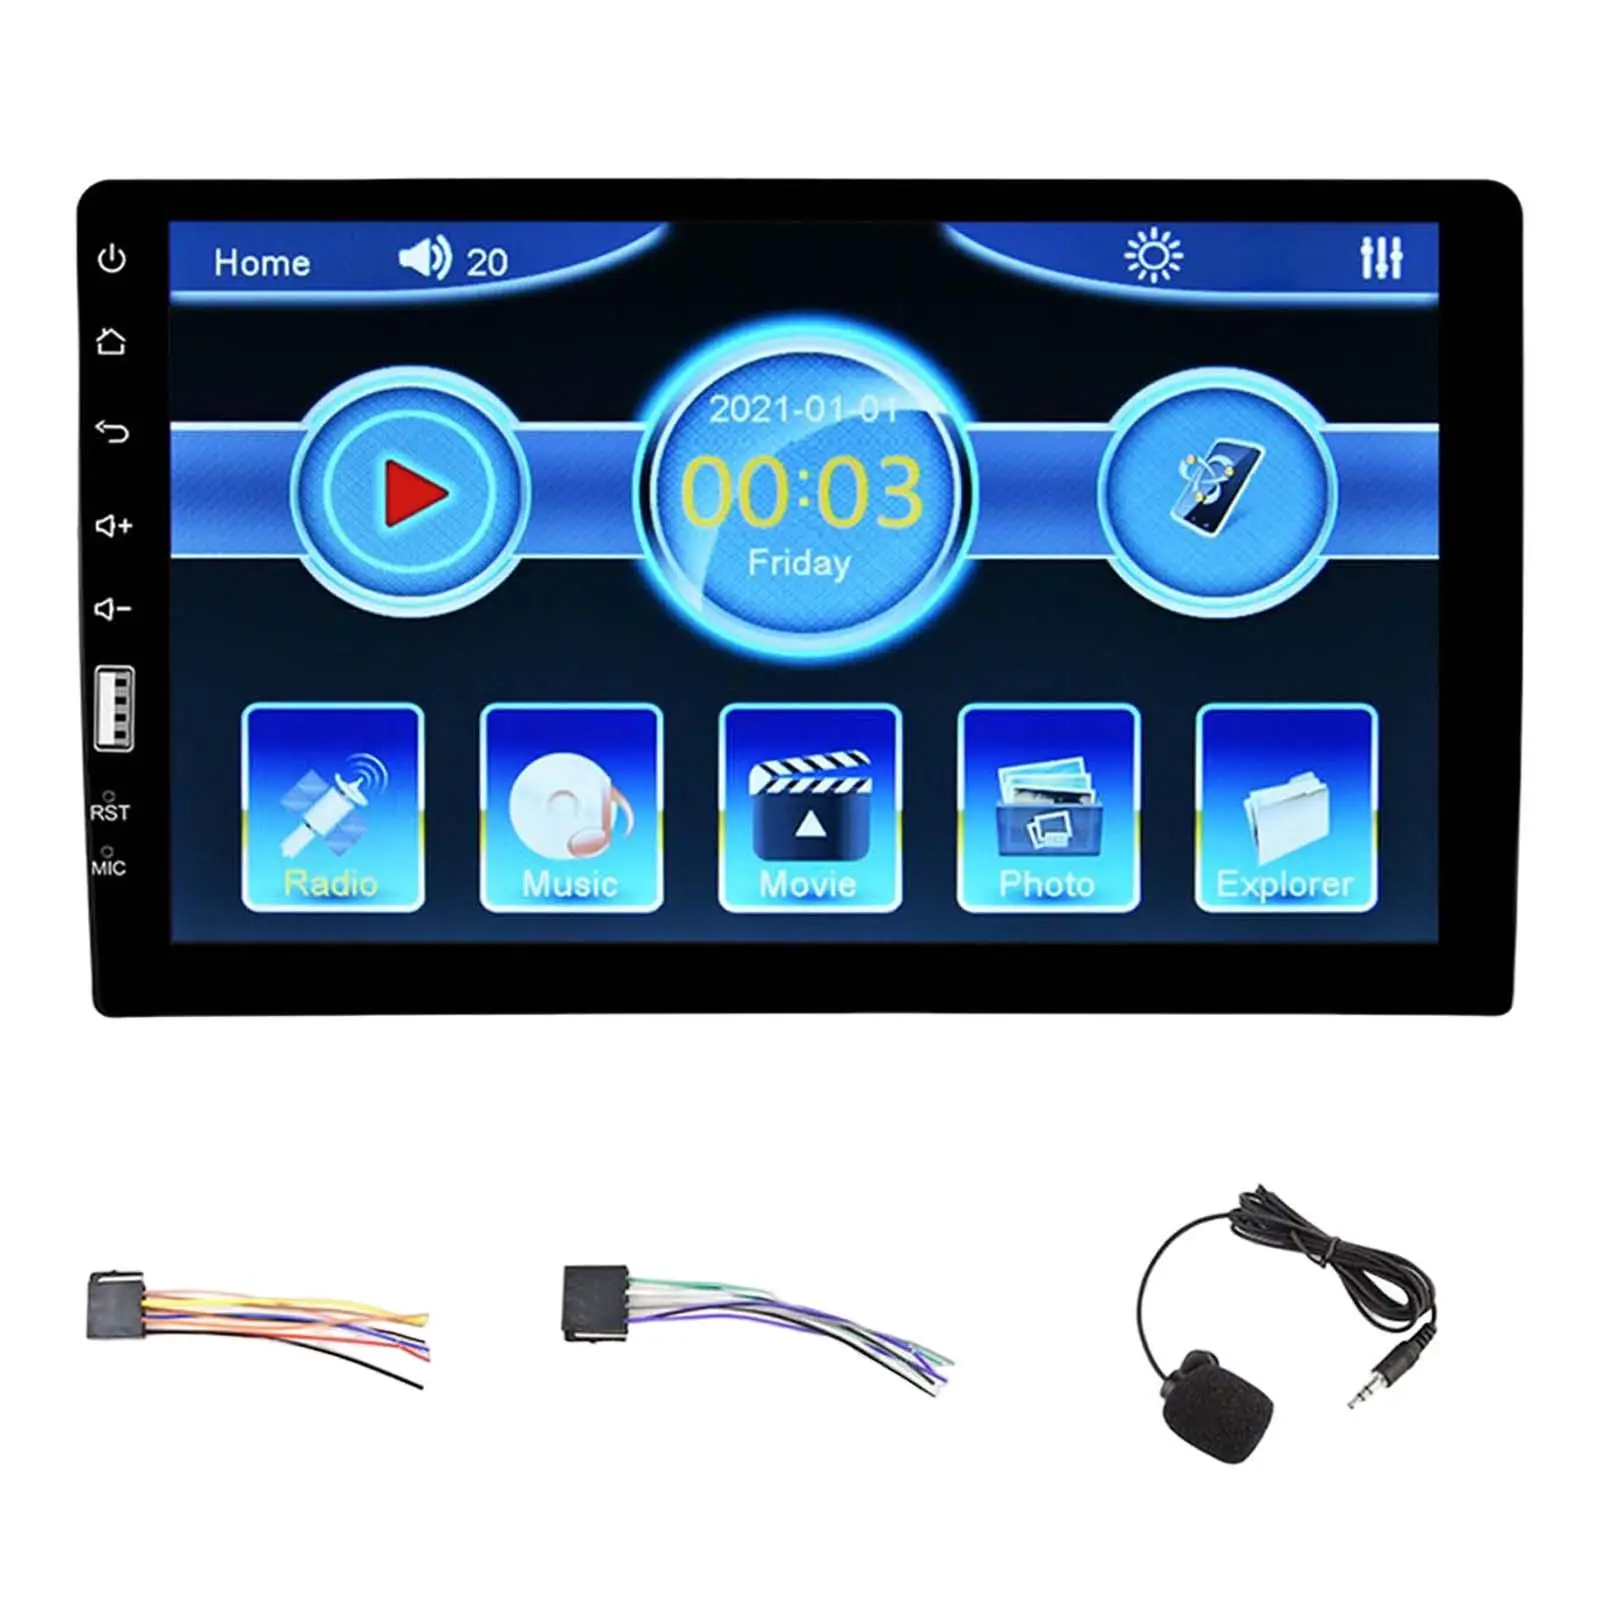 Vehicle Audio Receiver Handsfree Calling Camera Reversing Function FM Radio USB Multimedia Player for Auto Vehicles SUV Trucks